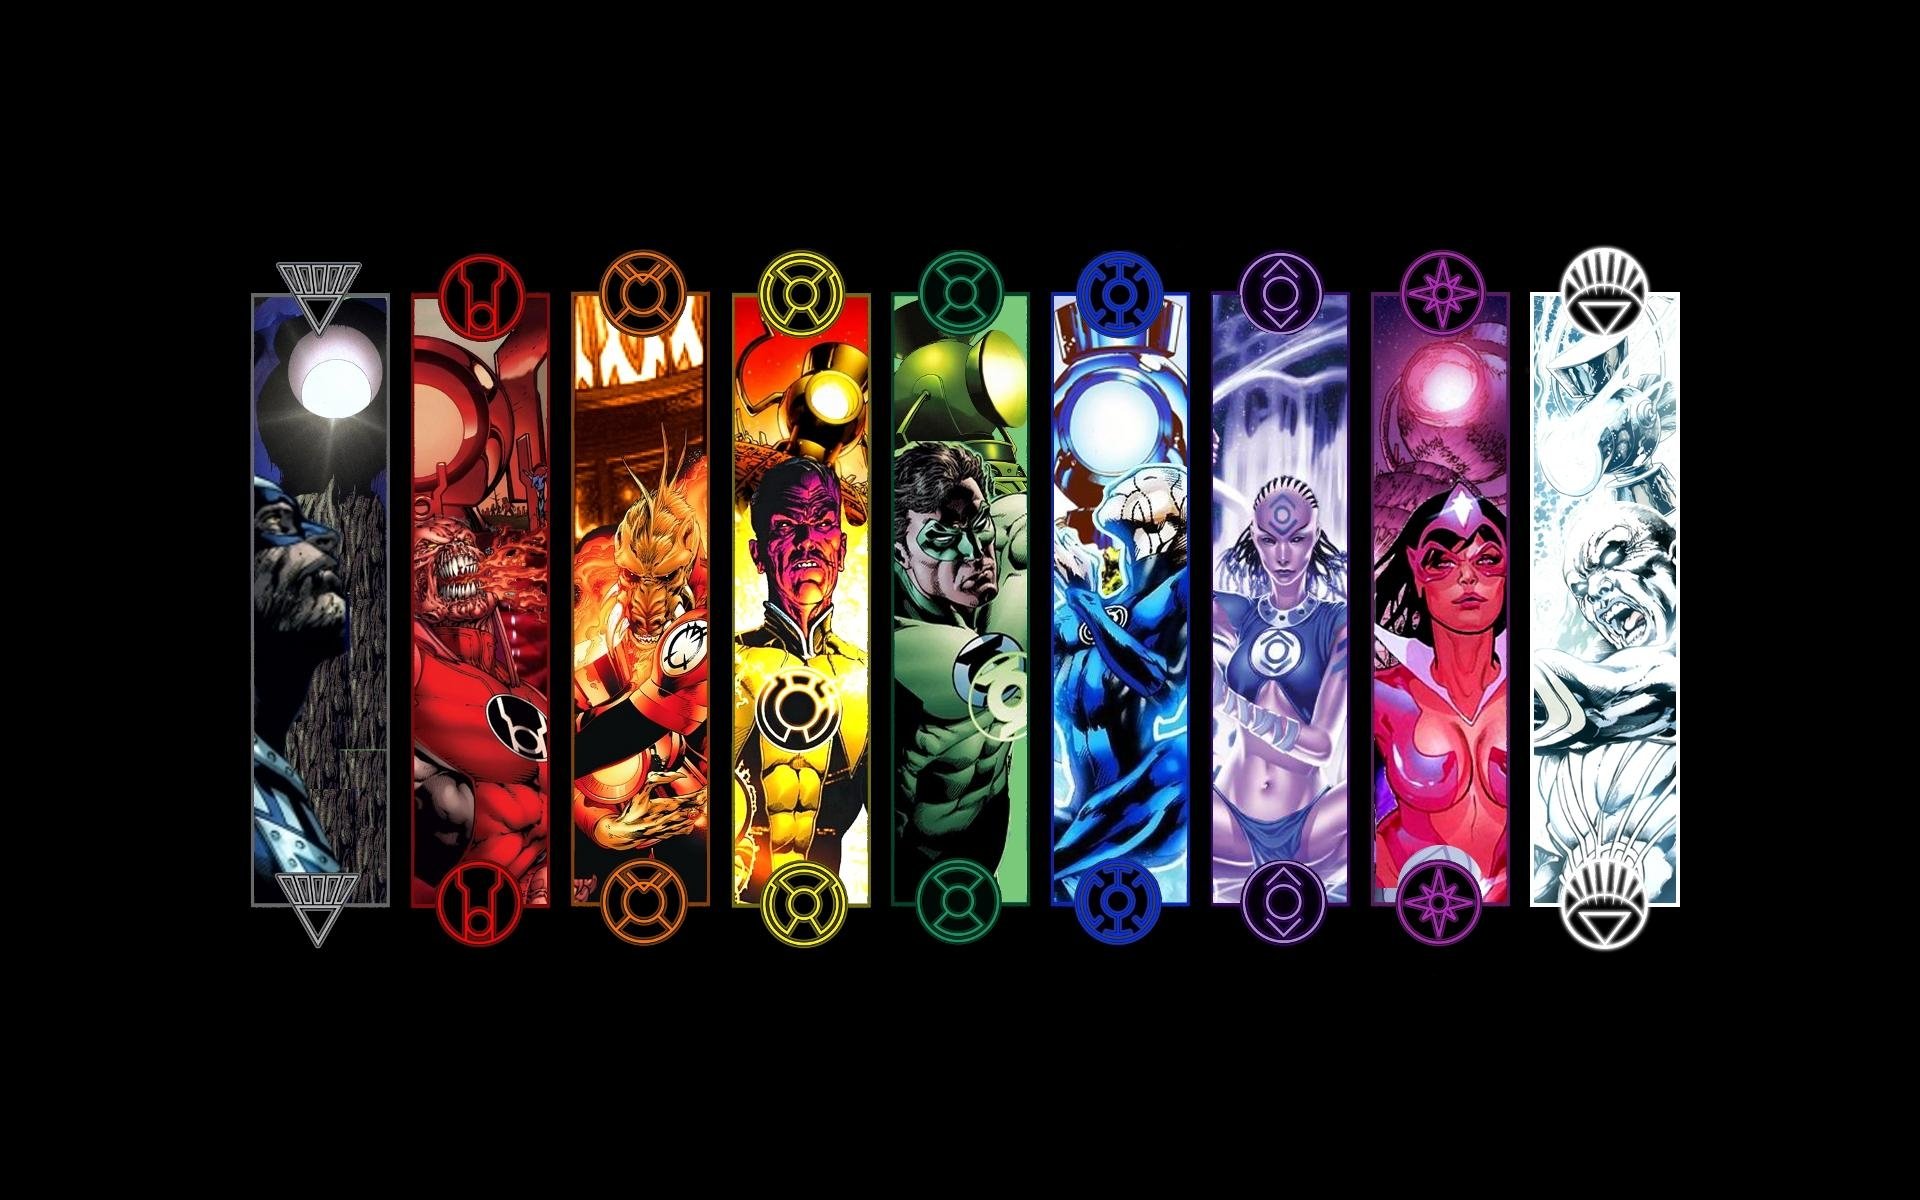 Green Lantern Corps HD Wallpaper Background Image